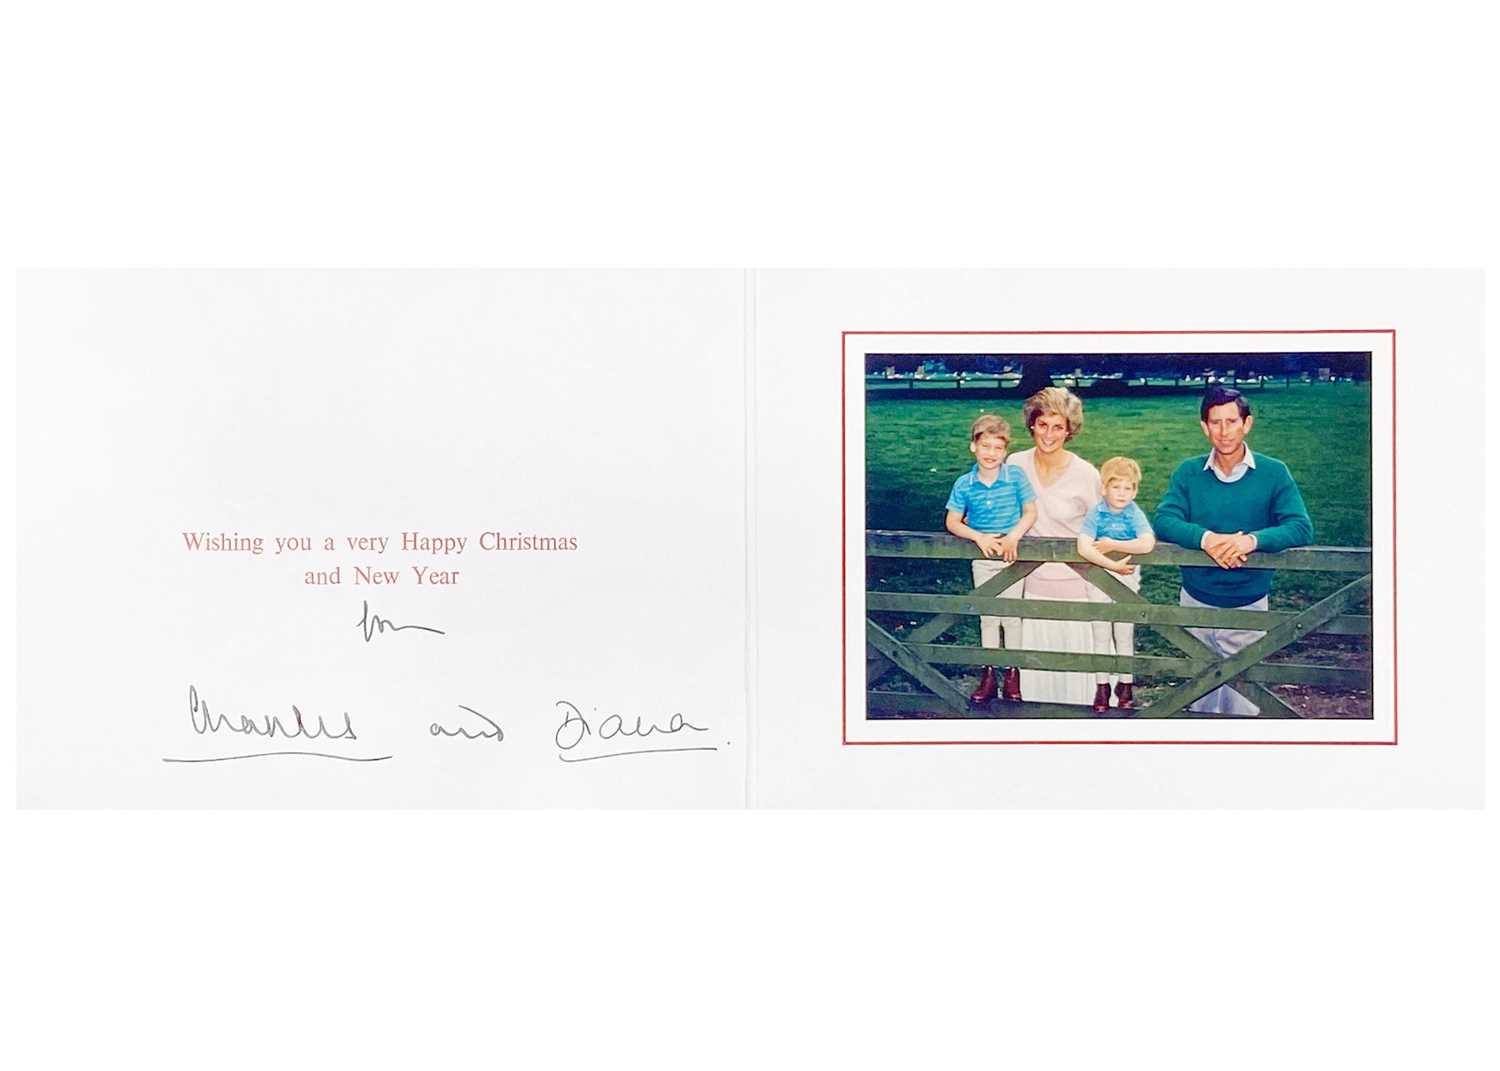 King Charles III, as The Prince of Wales & Diana, Princess of Wales, Royal Christmas card 1989 The